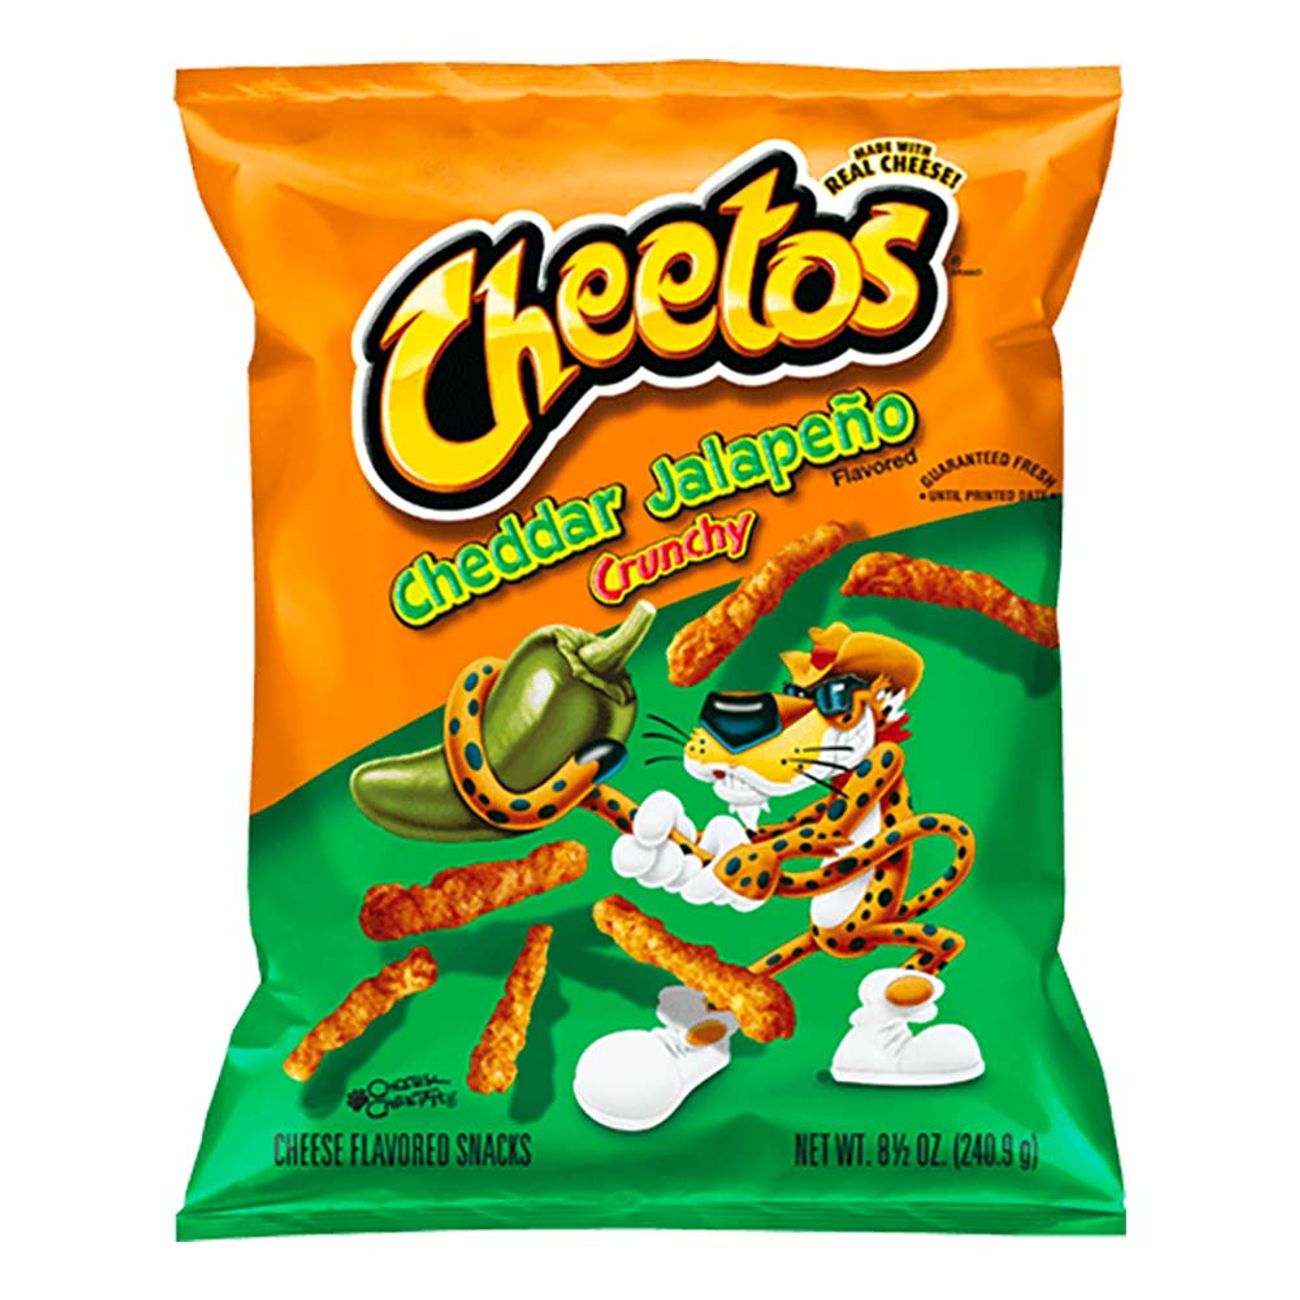 cheetos-crunchy-cheddar-jalapeno-92938-1